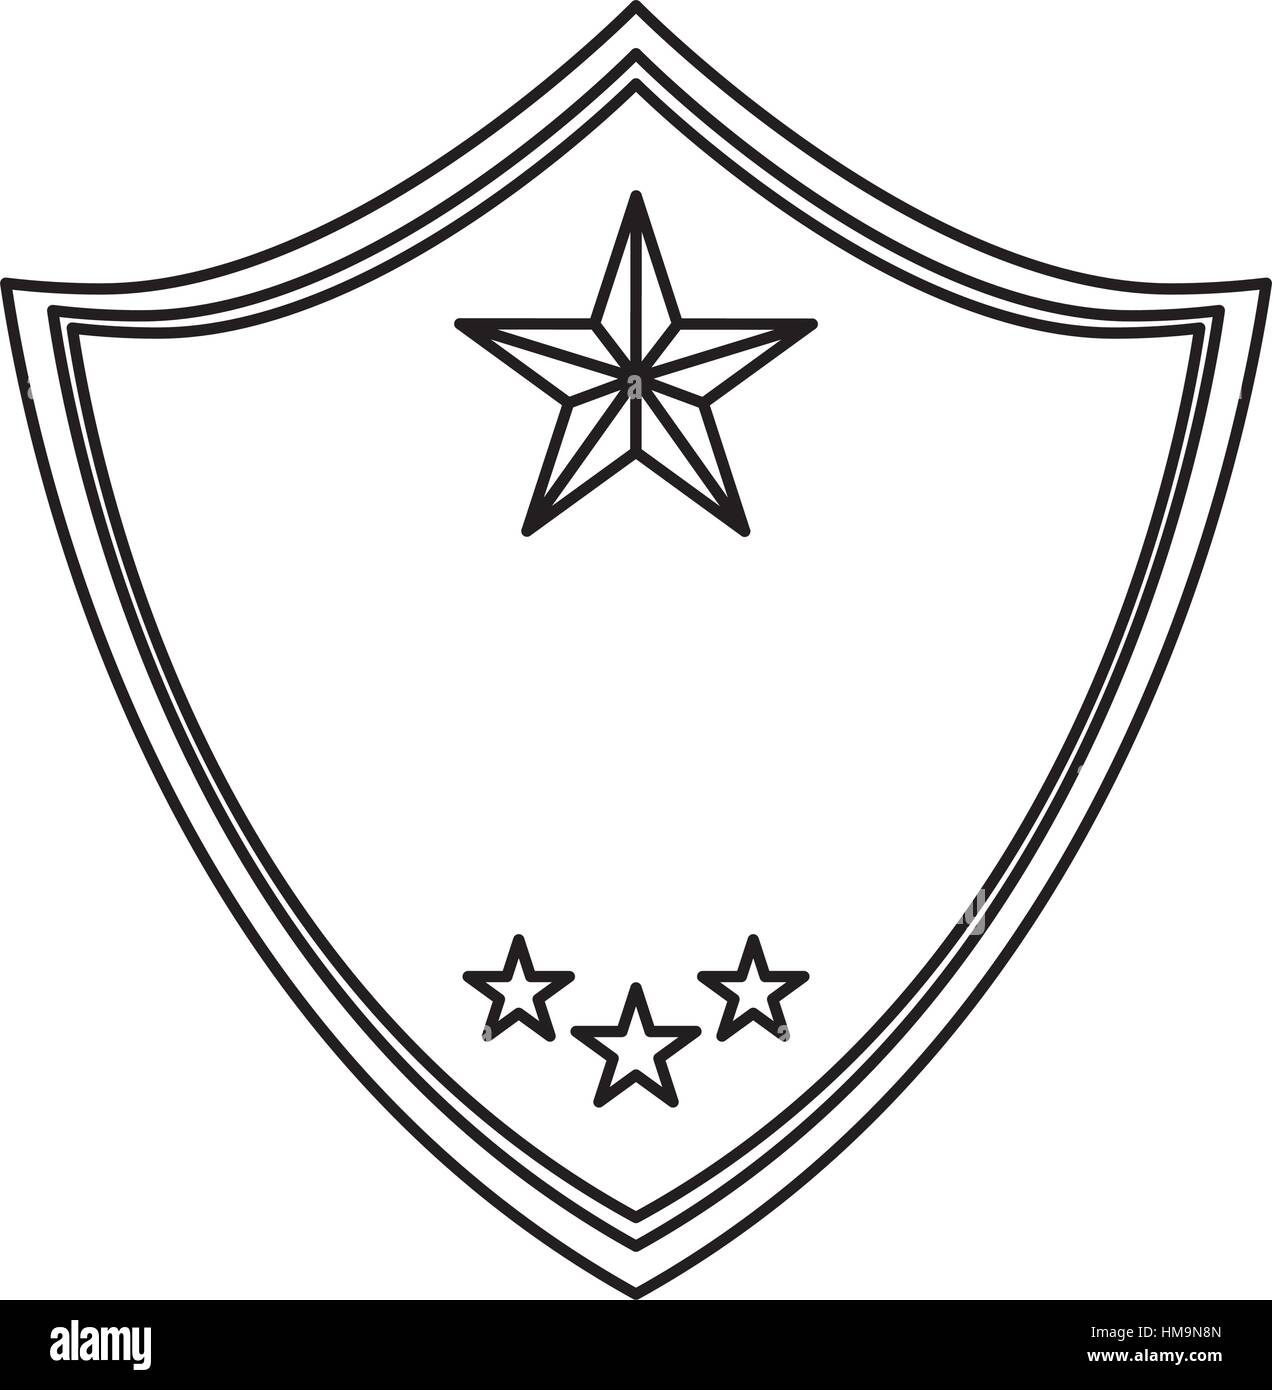 police emblem icon image black line vector illustration design Stock Vector